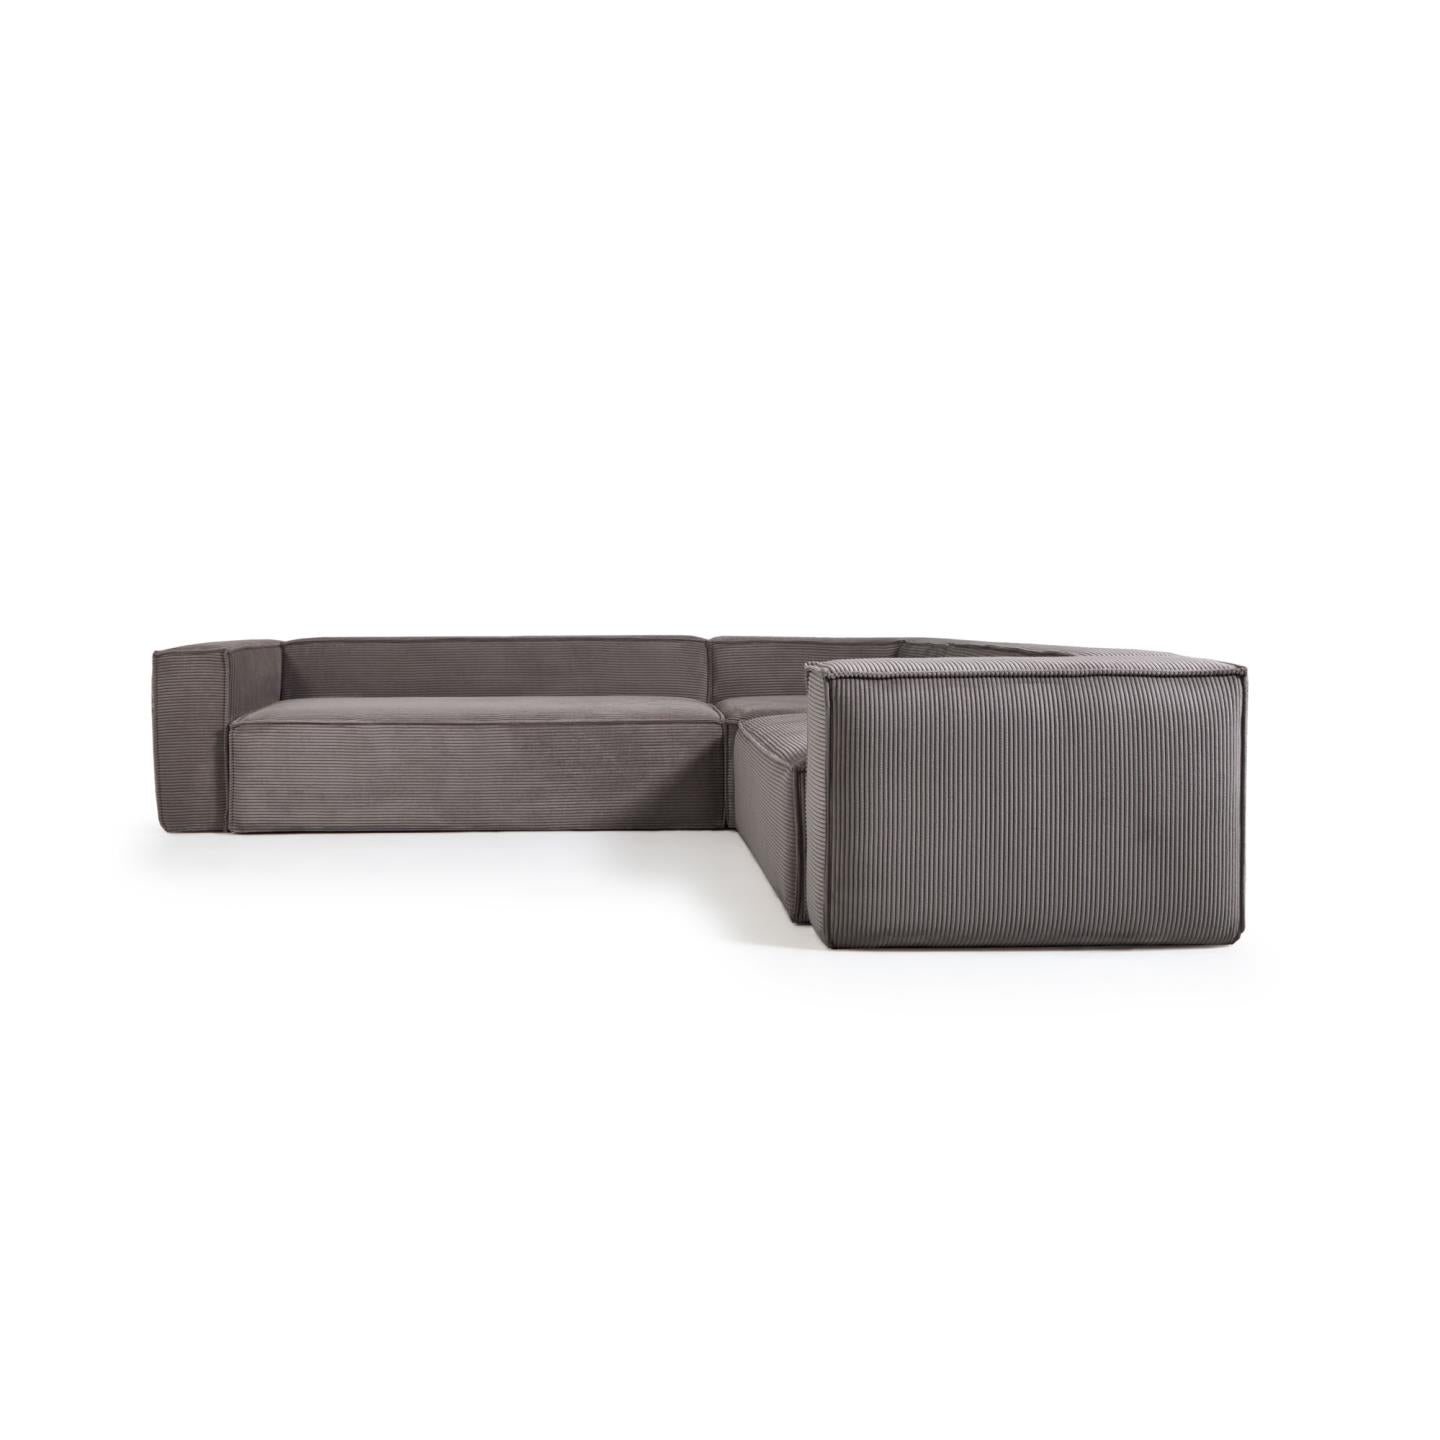 Blok 5 seater corner sofa in grey wide seam corduroy, 320 x 290 / 290 x 320 cm